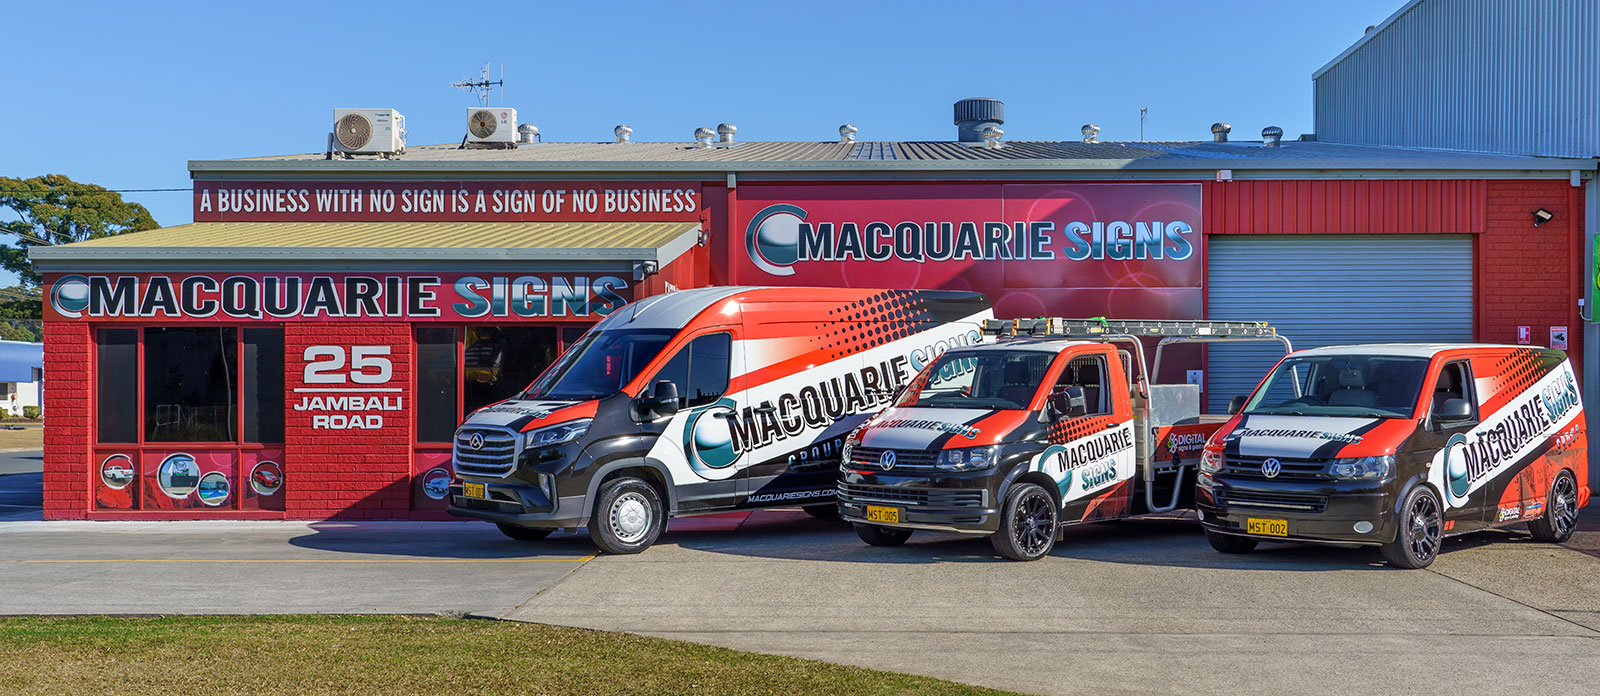 Macquarie-signs